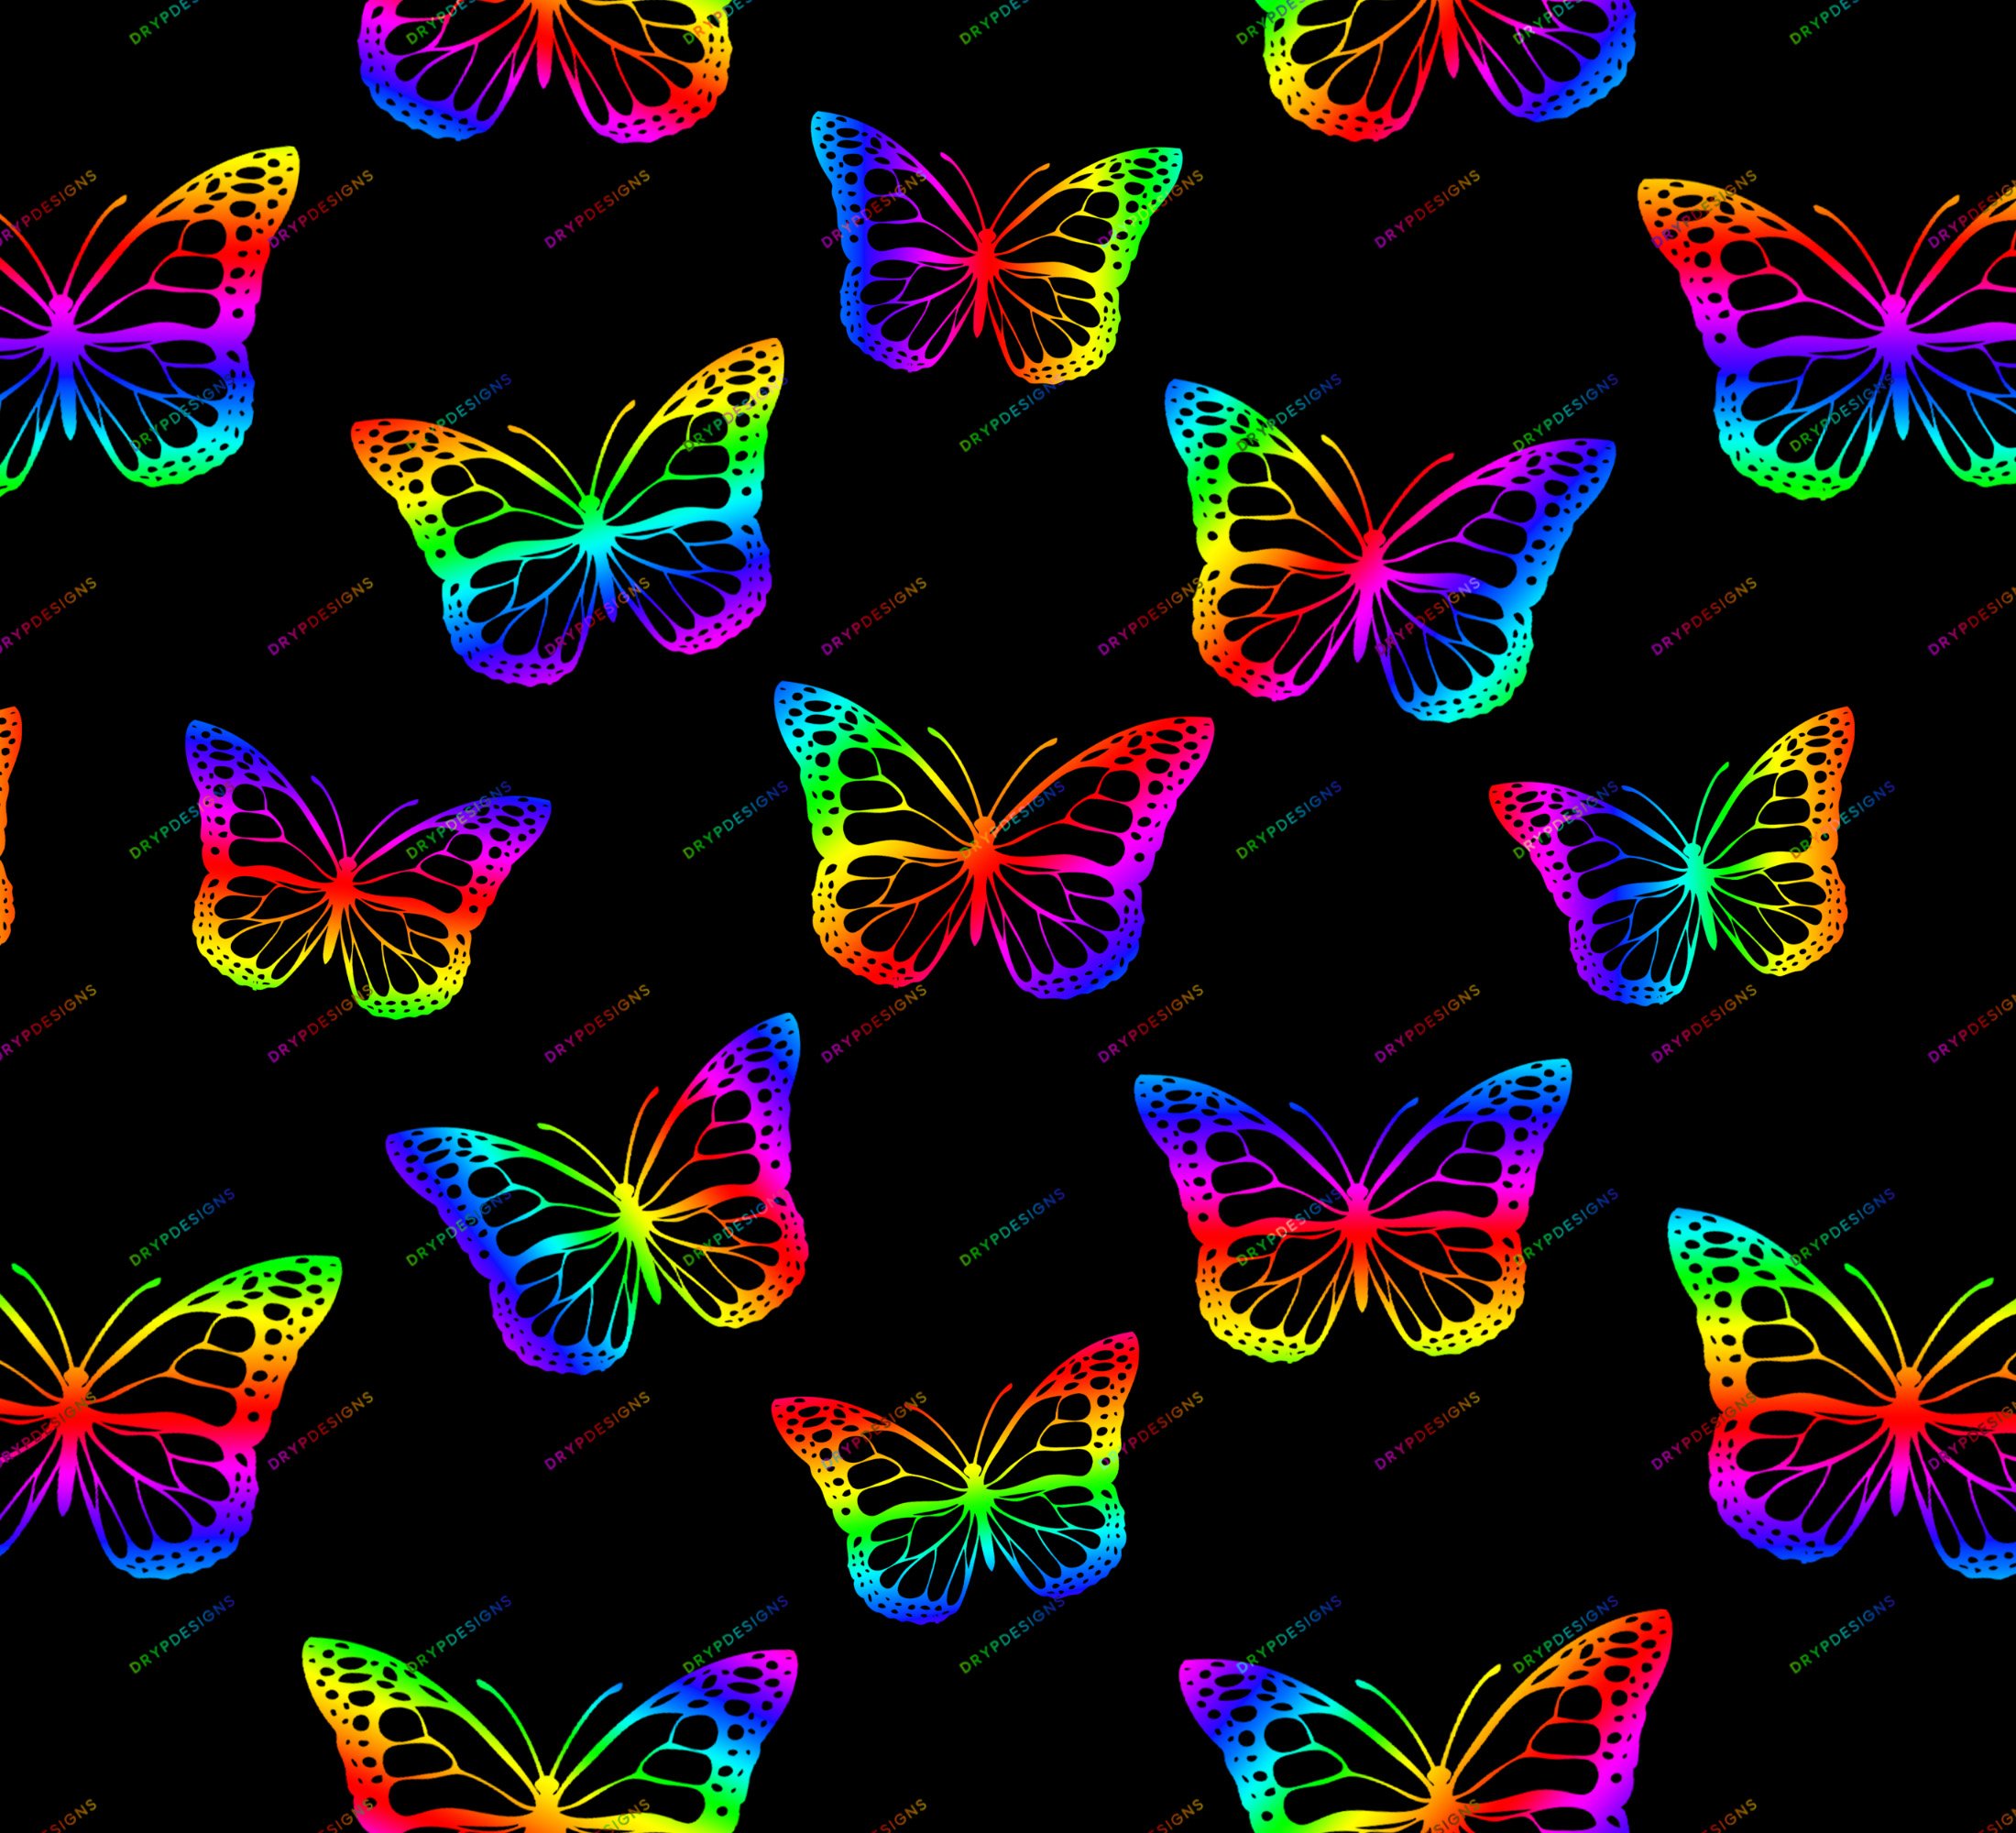 RAINBOW BUTTERFLIES by GREENFROGGY1